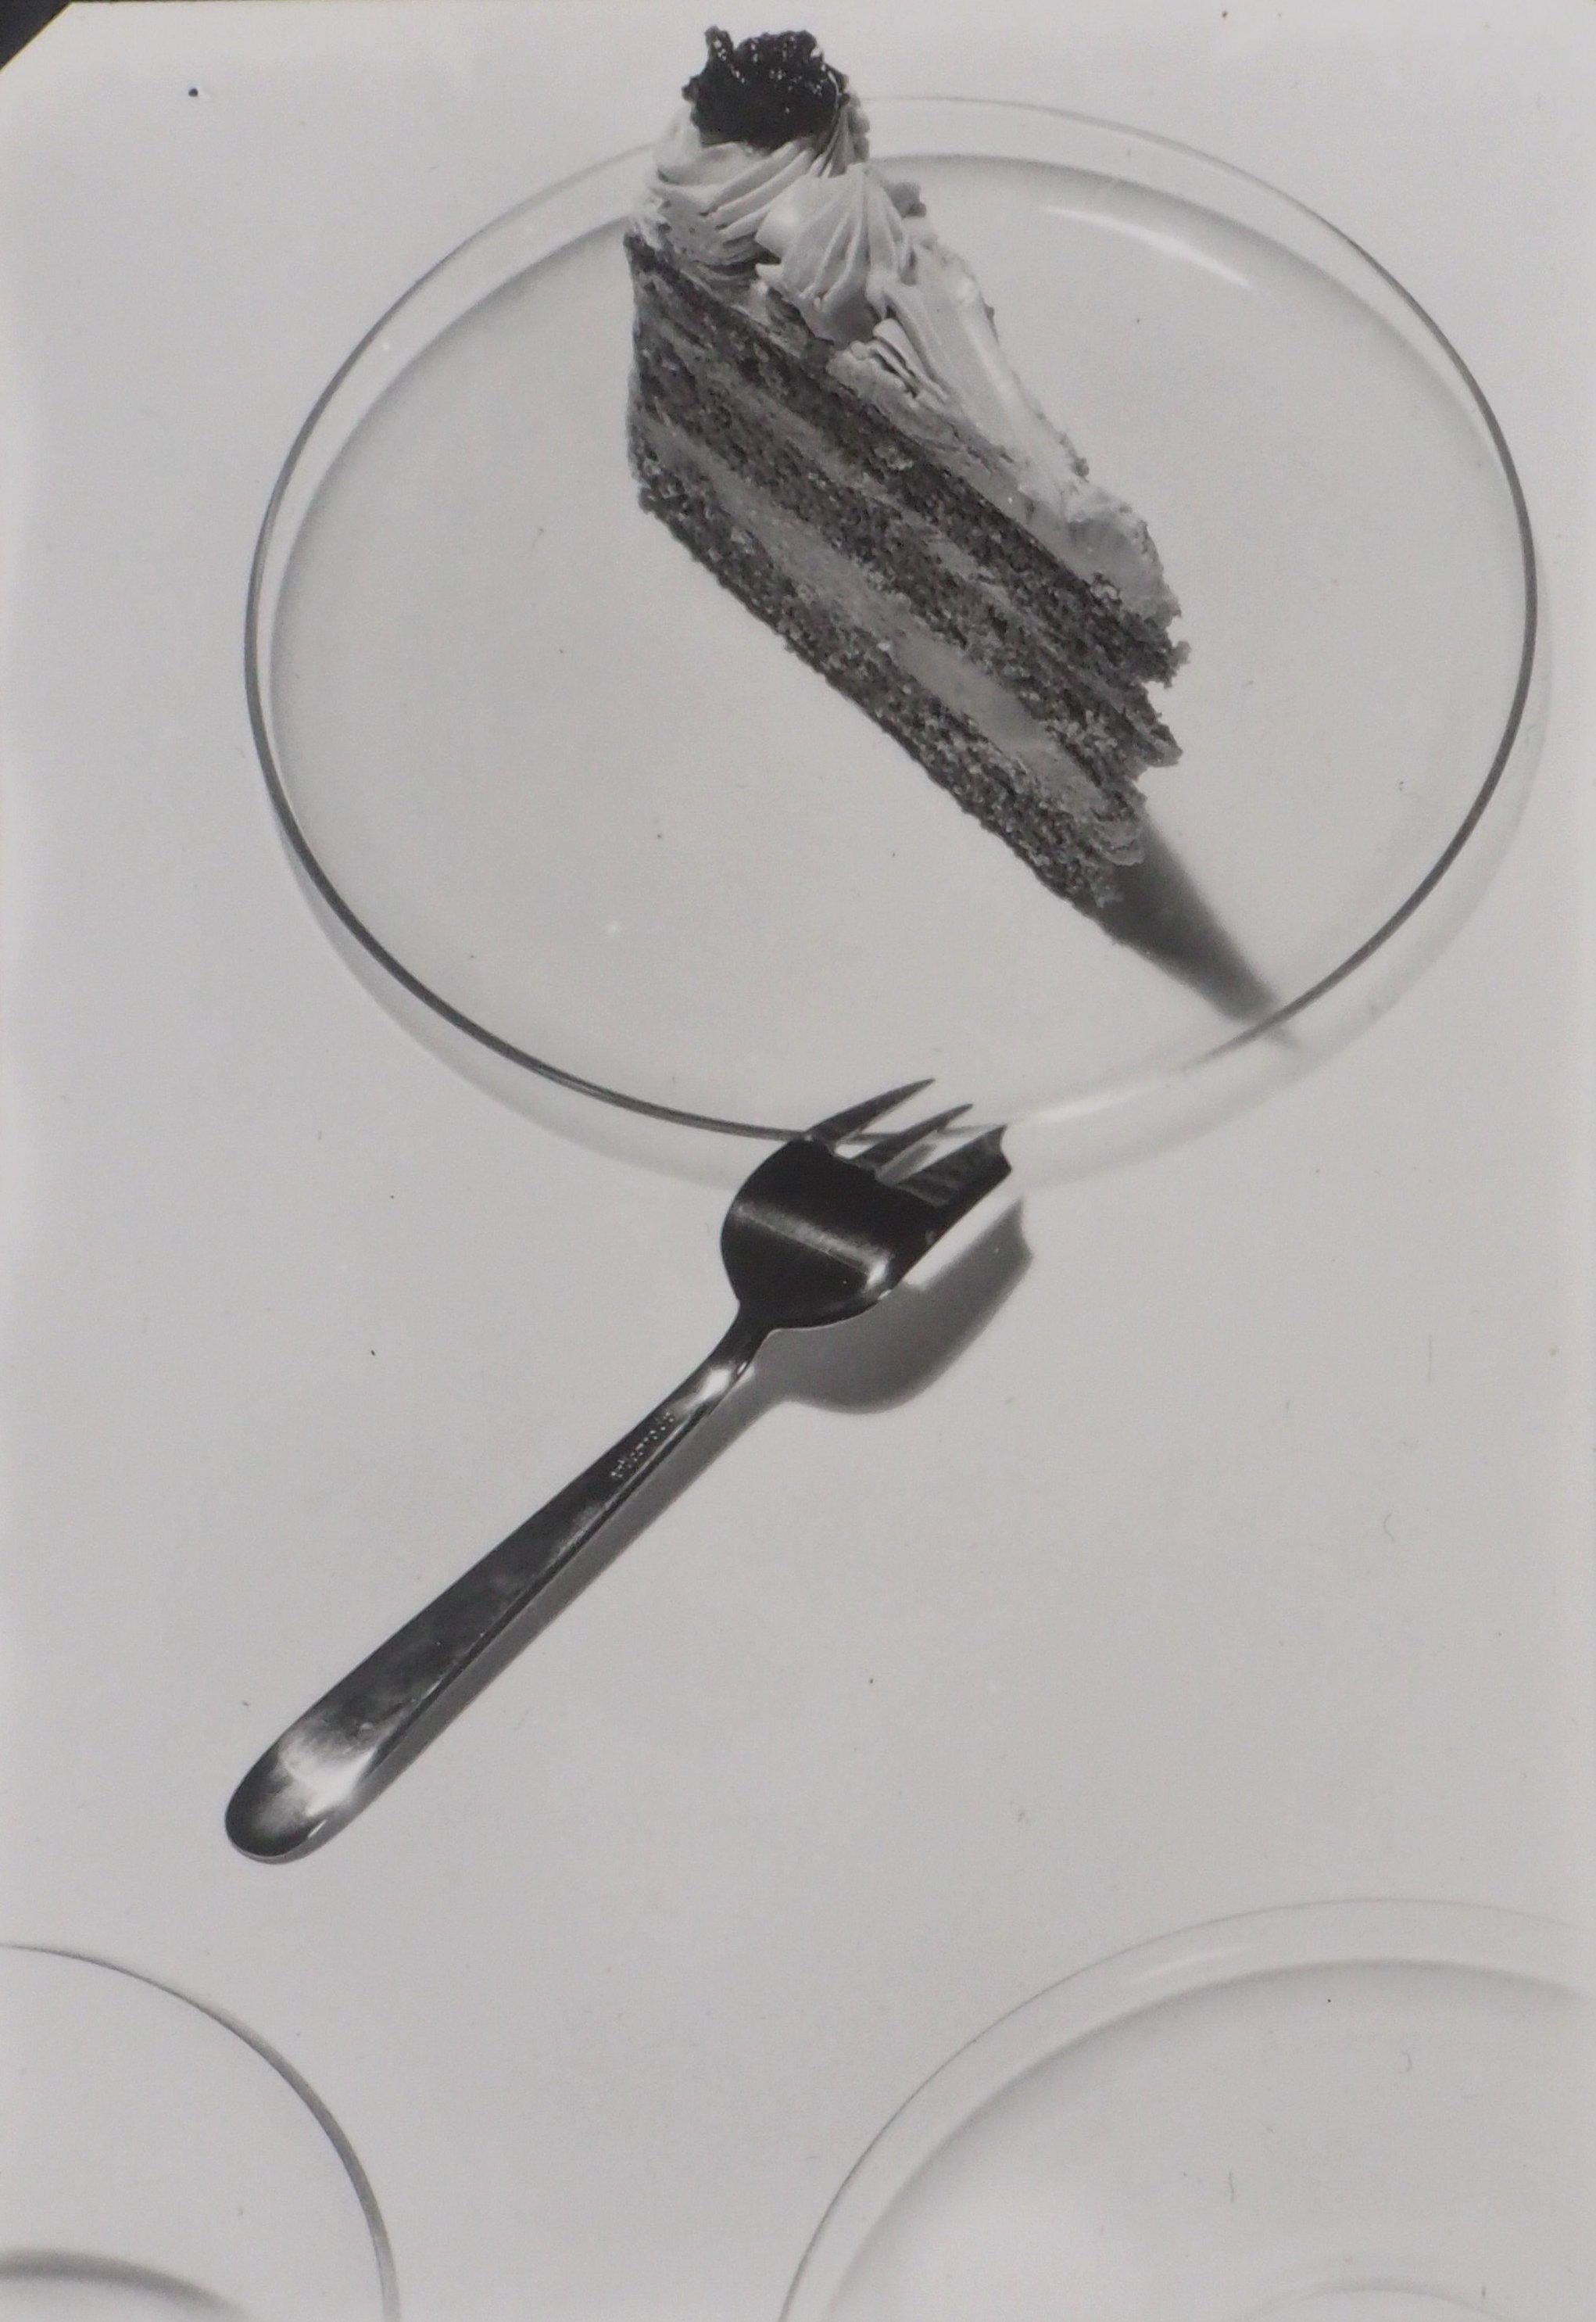 Josef Sudek Still-Life Photograph - Dessert - Original Gelatin Silver Photograph, c. 1940